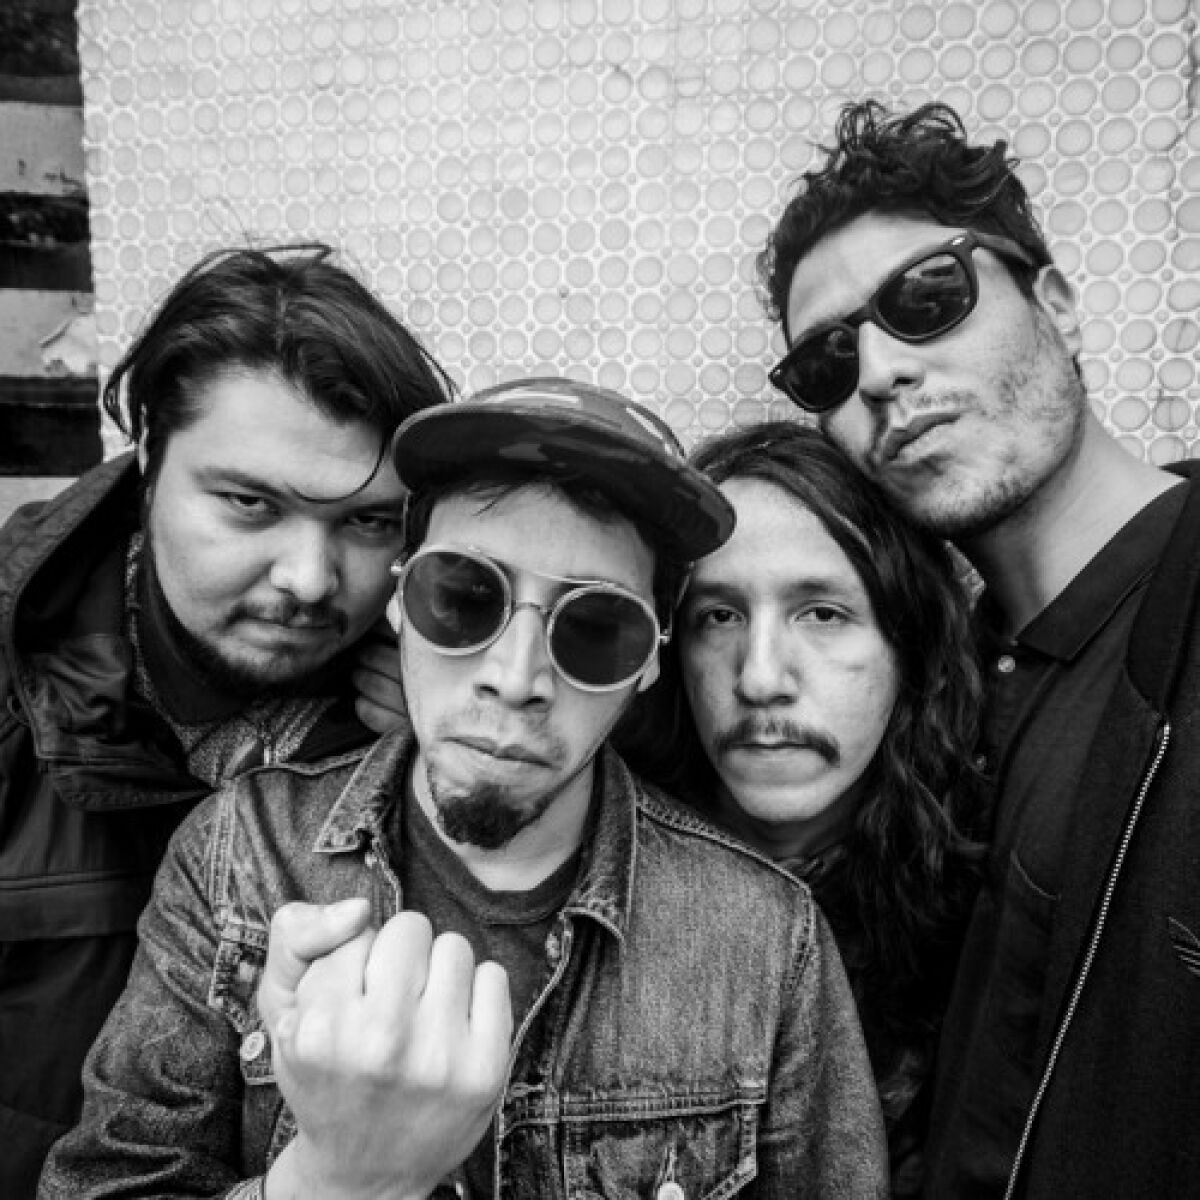 The festival headliner on Feb. 8 is Tijuana-based San Pedro El Cortez, a psychedelic garage rock band.